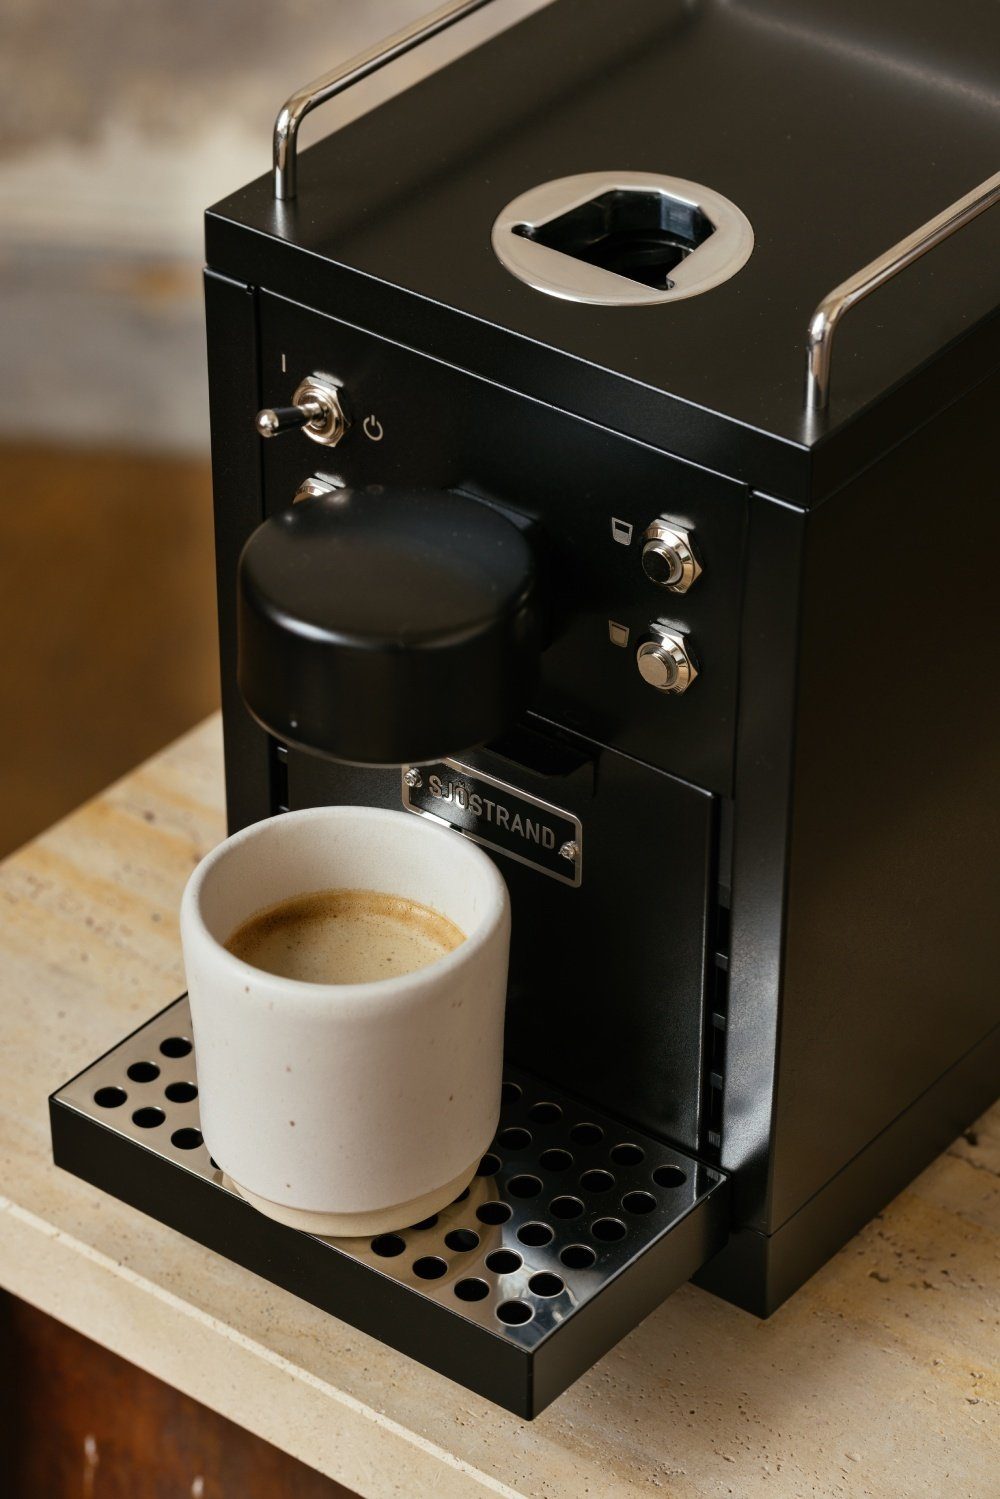 Black Espresso Capsule Kapselmaschine Machine Sjöstrand